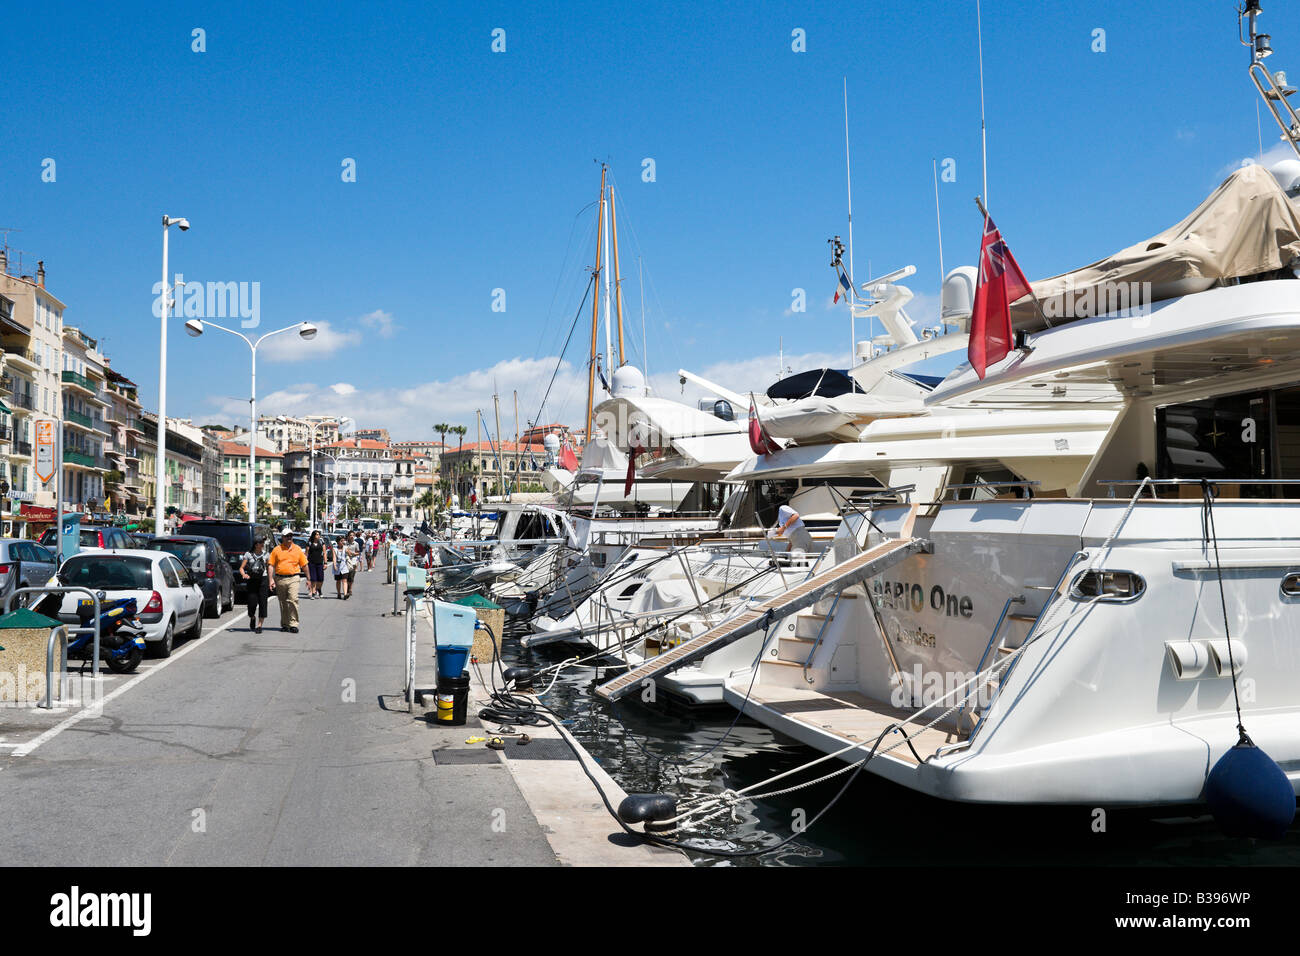 Luxury yachts in the Vieux Port (the old harbour), Quai St Pierre, Cannes, Cote d Azur, Provence, France Stock Photo